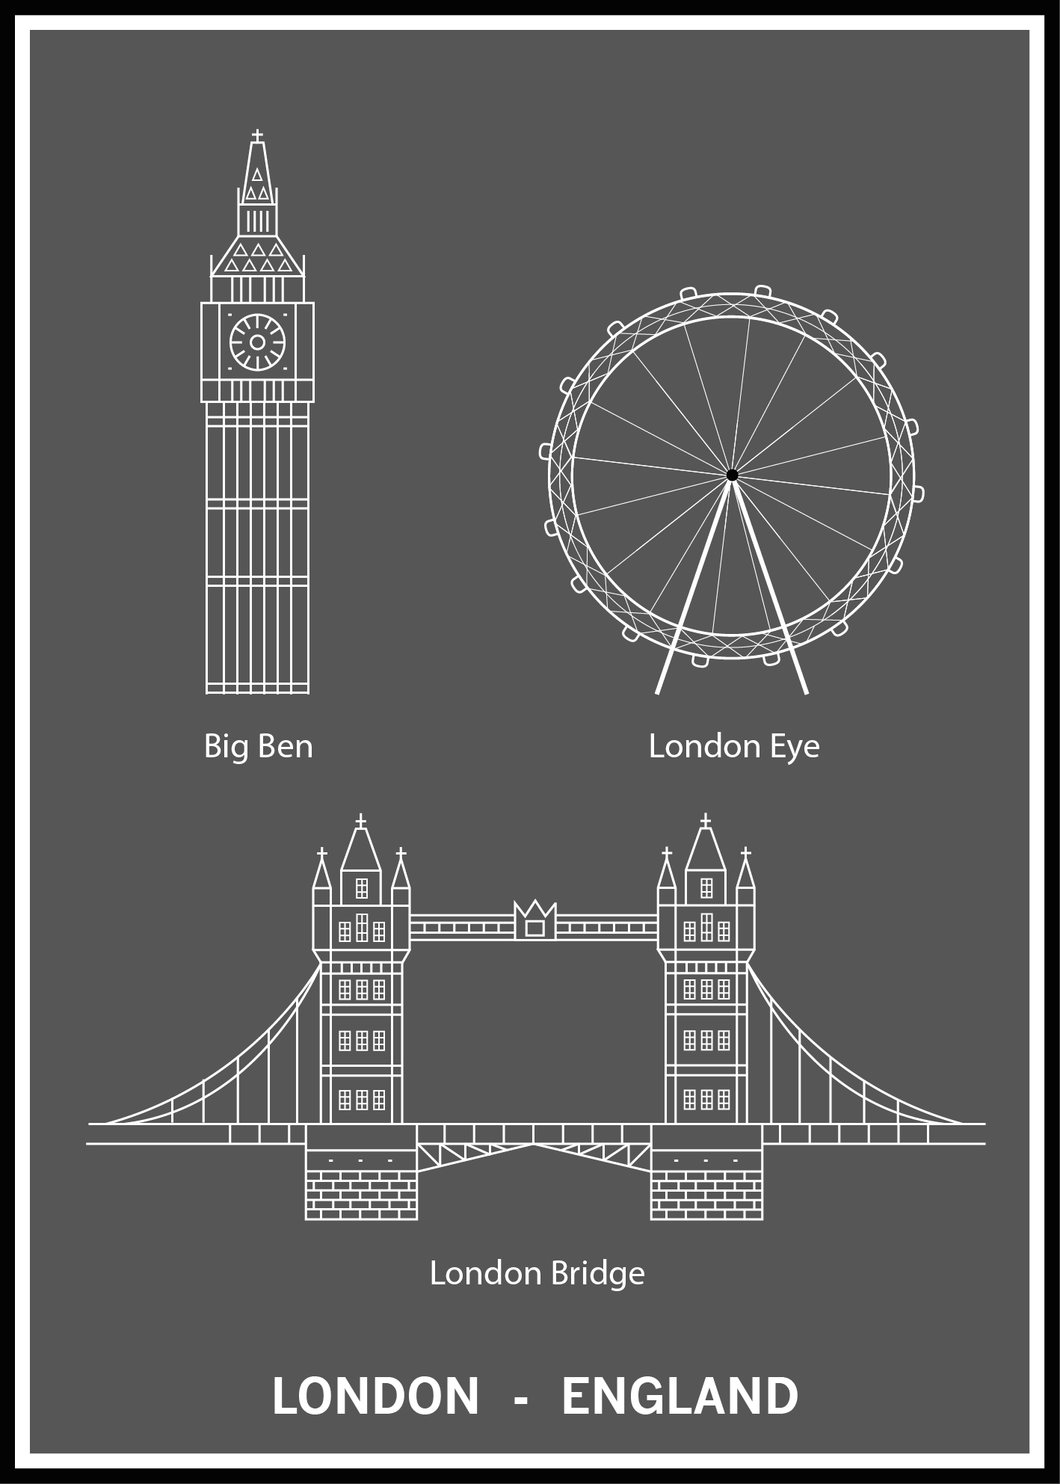 London-England dark poster